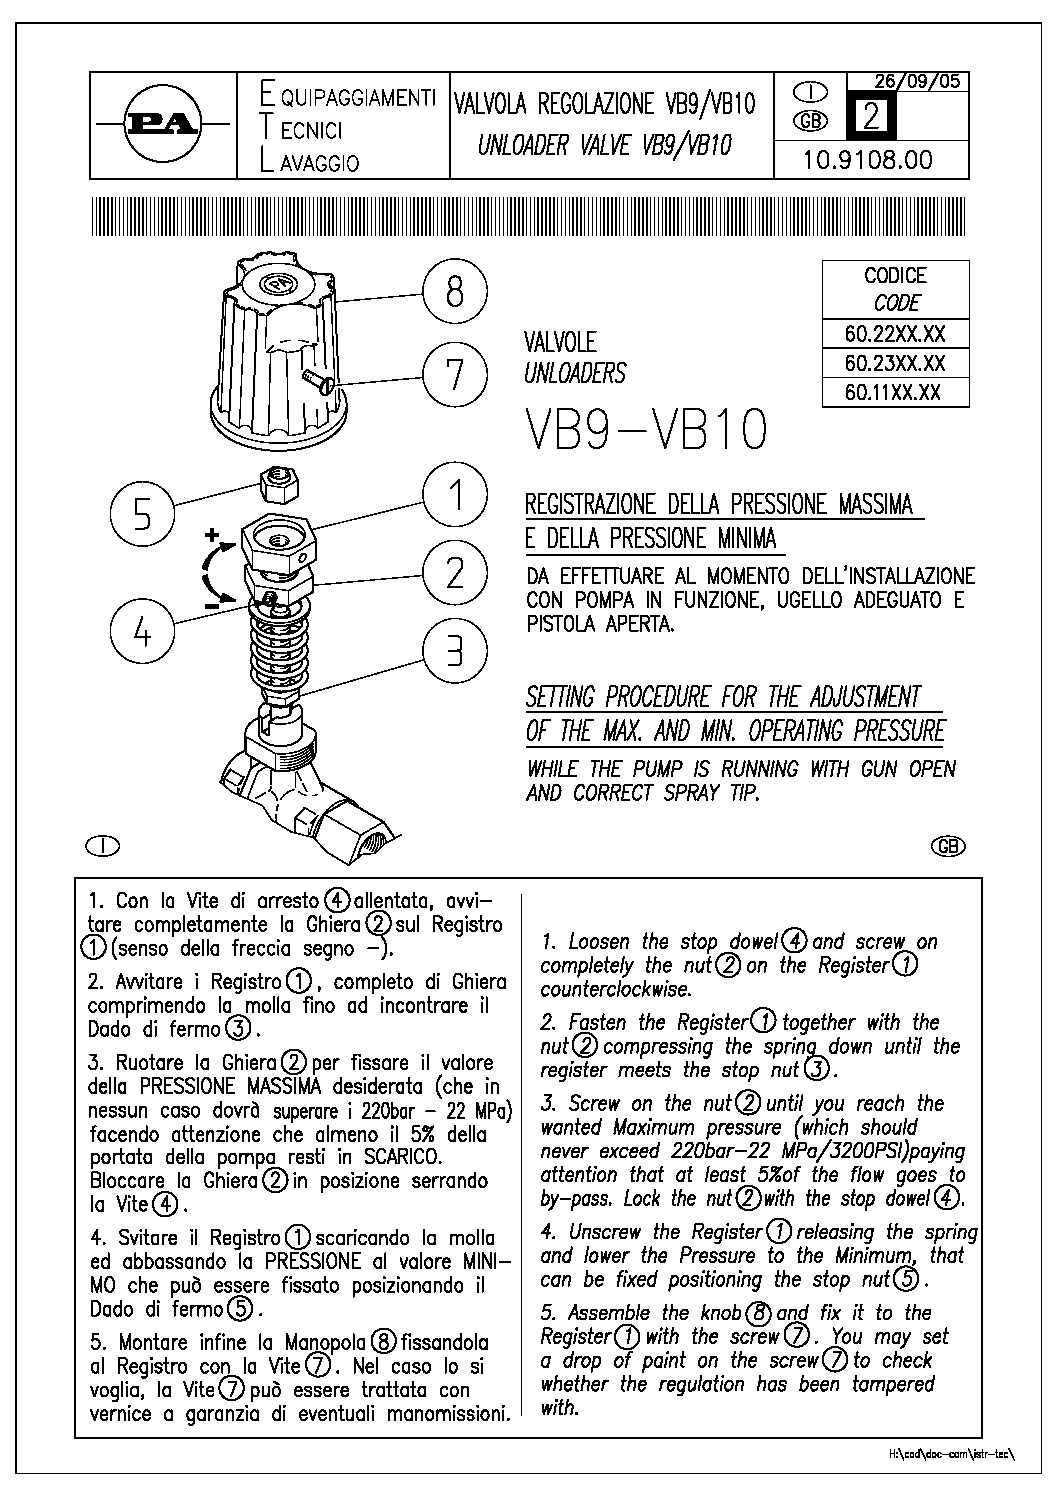 PA VB9/VB10 adjusting instructions